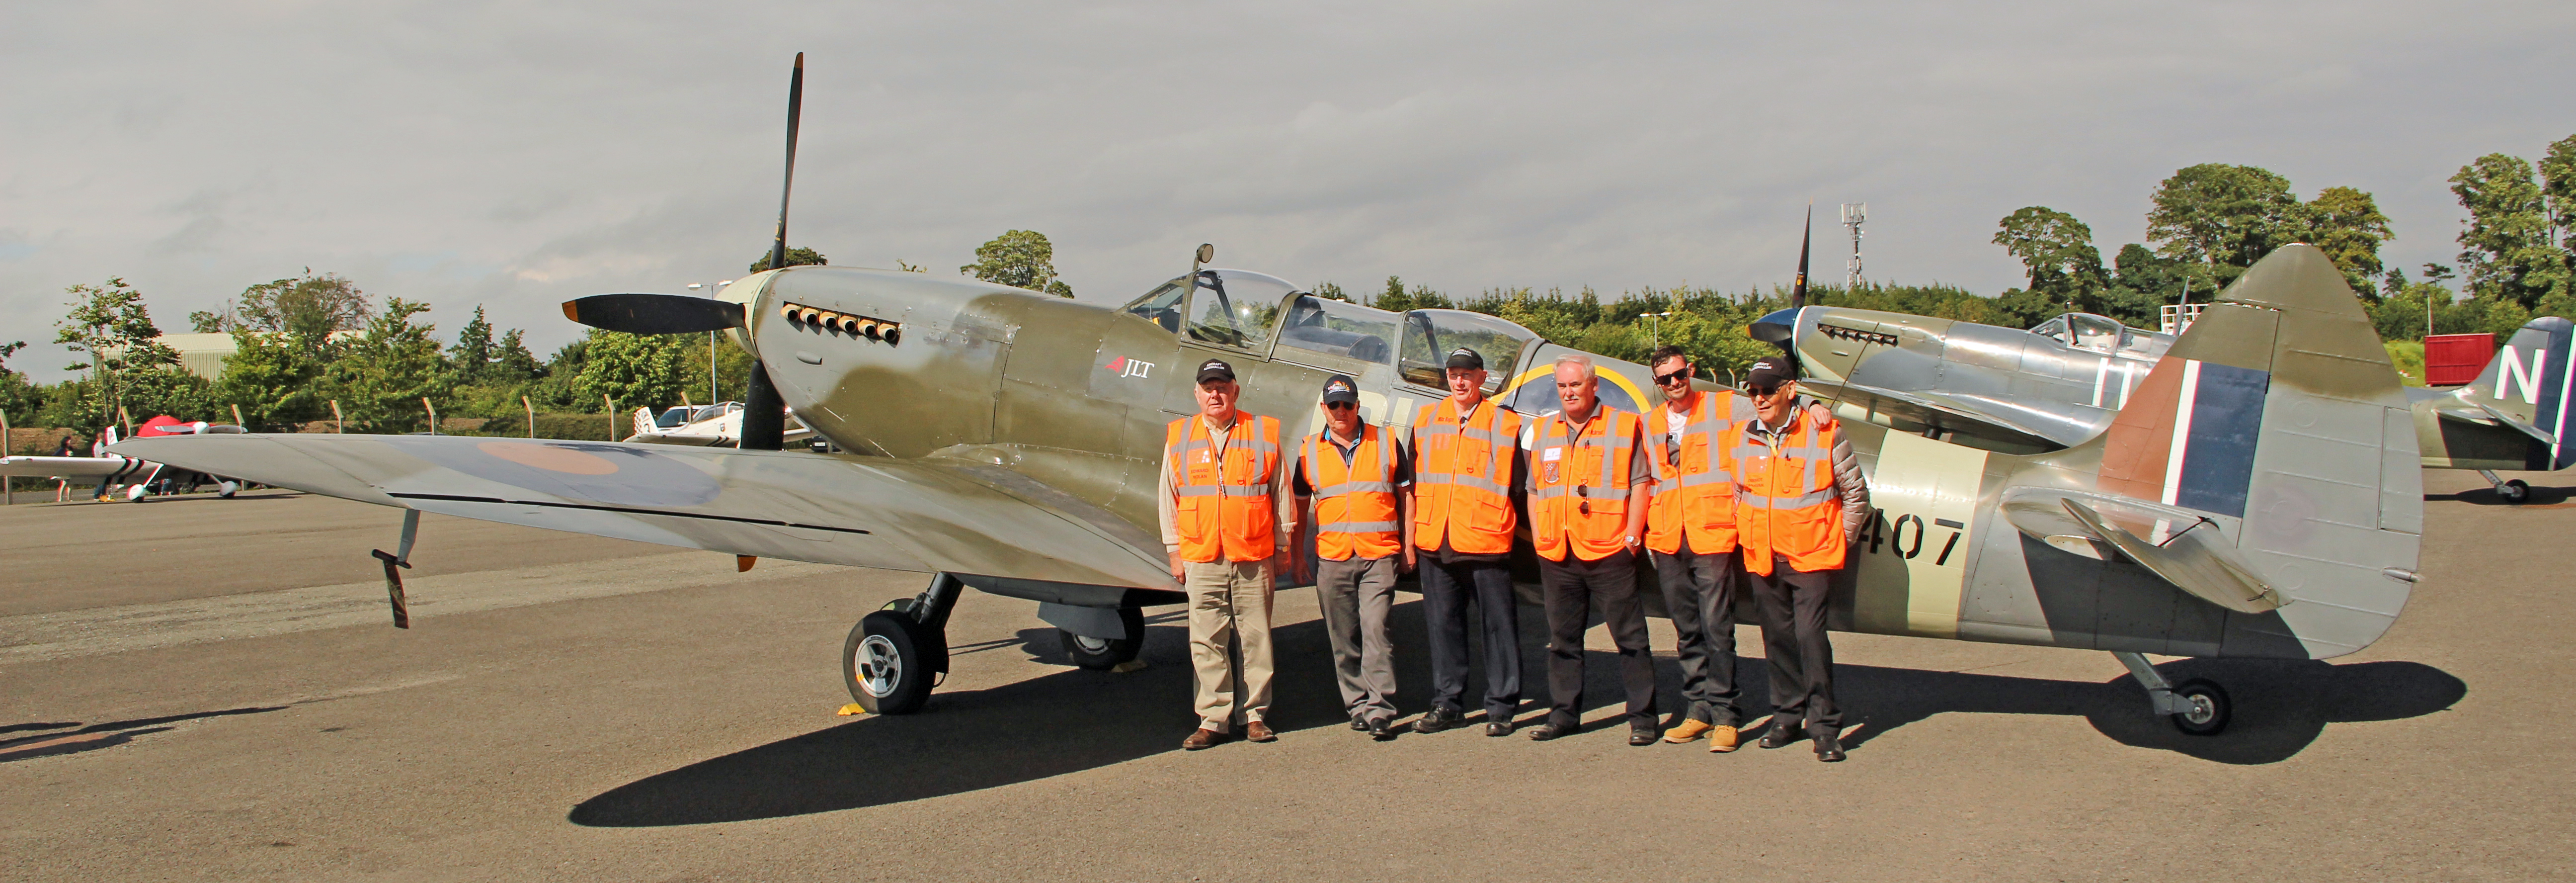 Follow Me-Aircraft Marshallers team at Weston